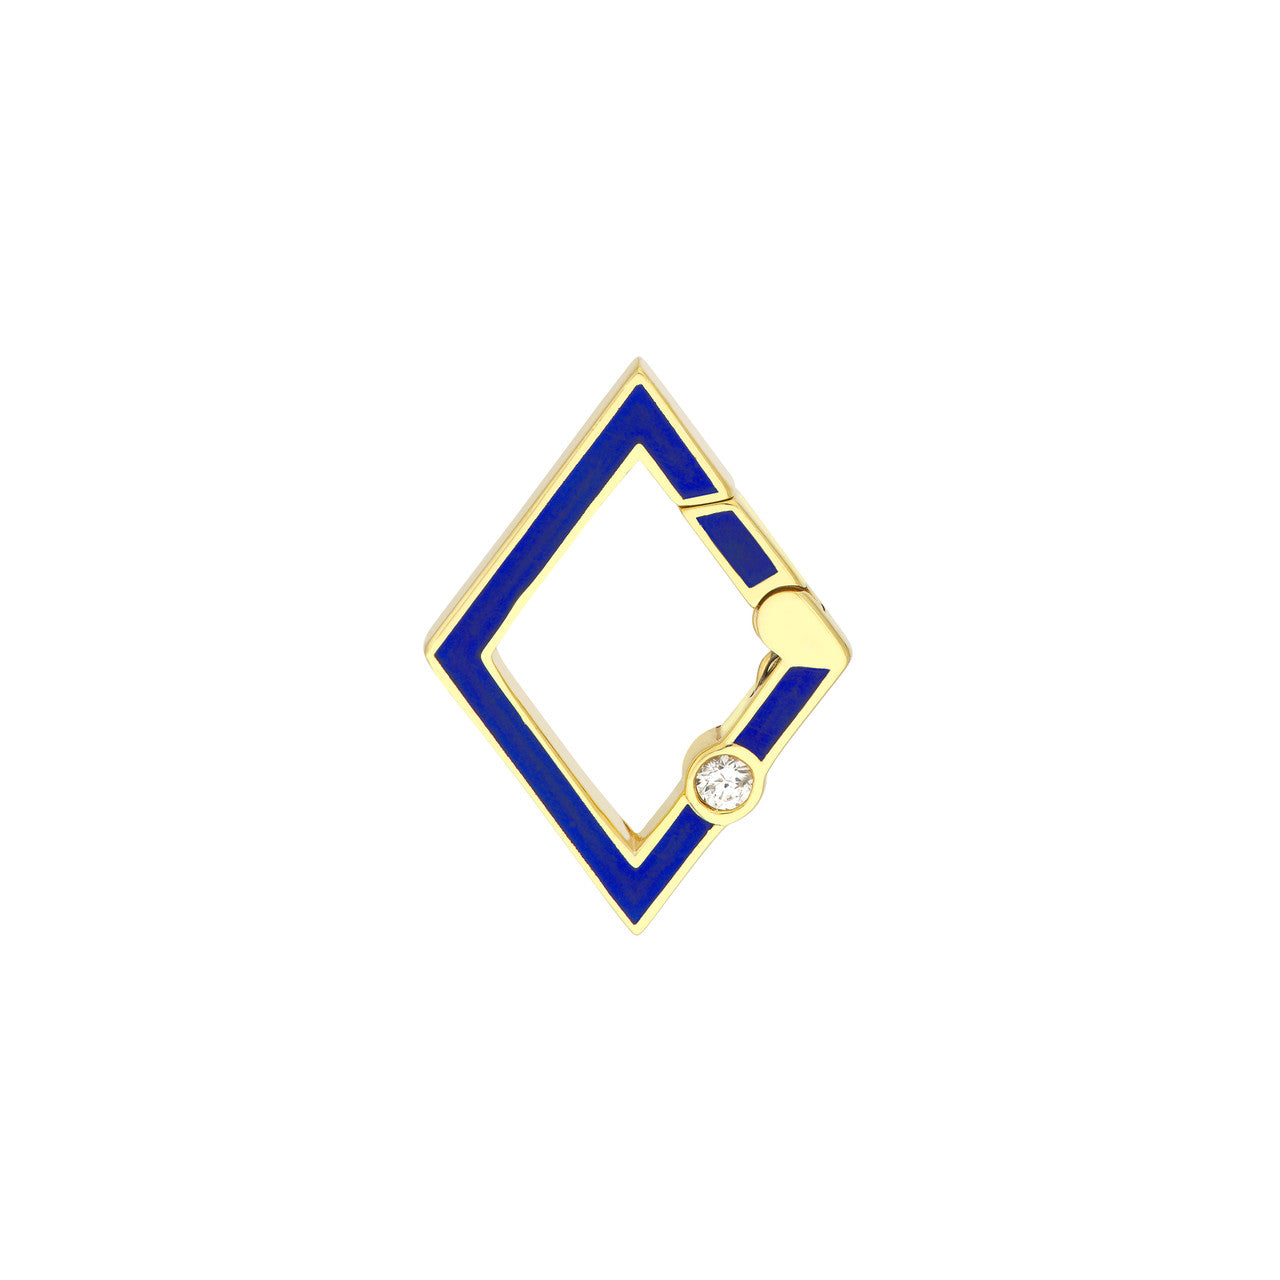 14k Yellow Gold Diamond Navy Blue Enamel Rhombus Geometric Style Push Clasp Lock Connector Pendant Charm Hanger Bail Enhancer